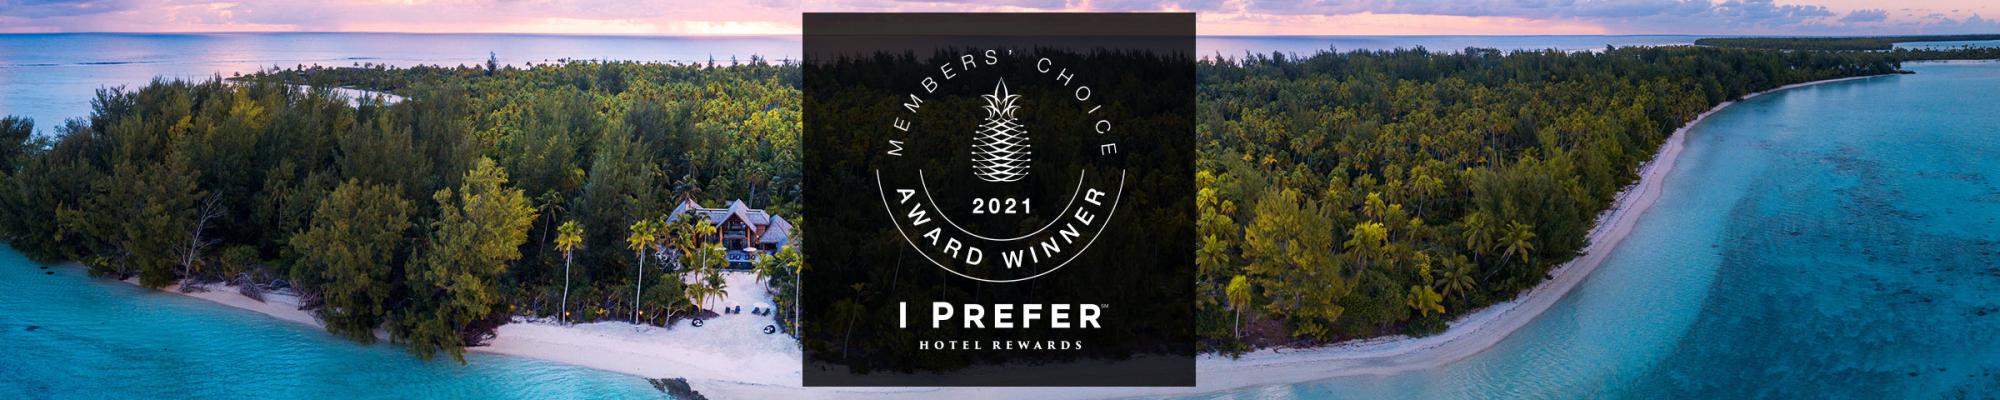 2021 i prefer hotel rewards members' choice awards 